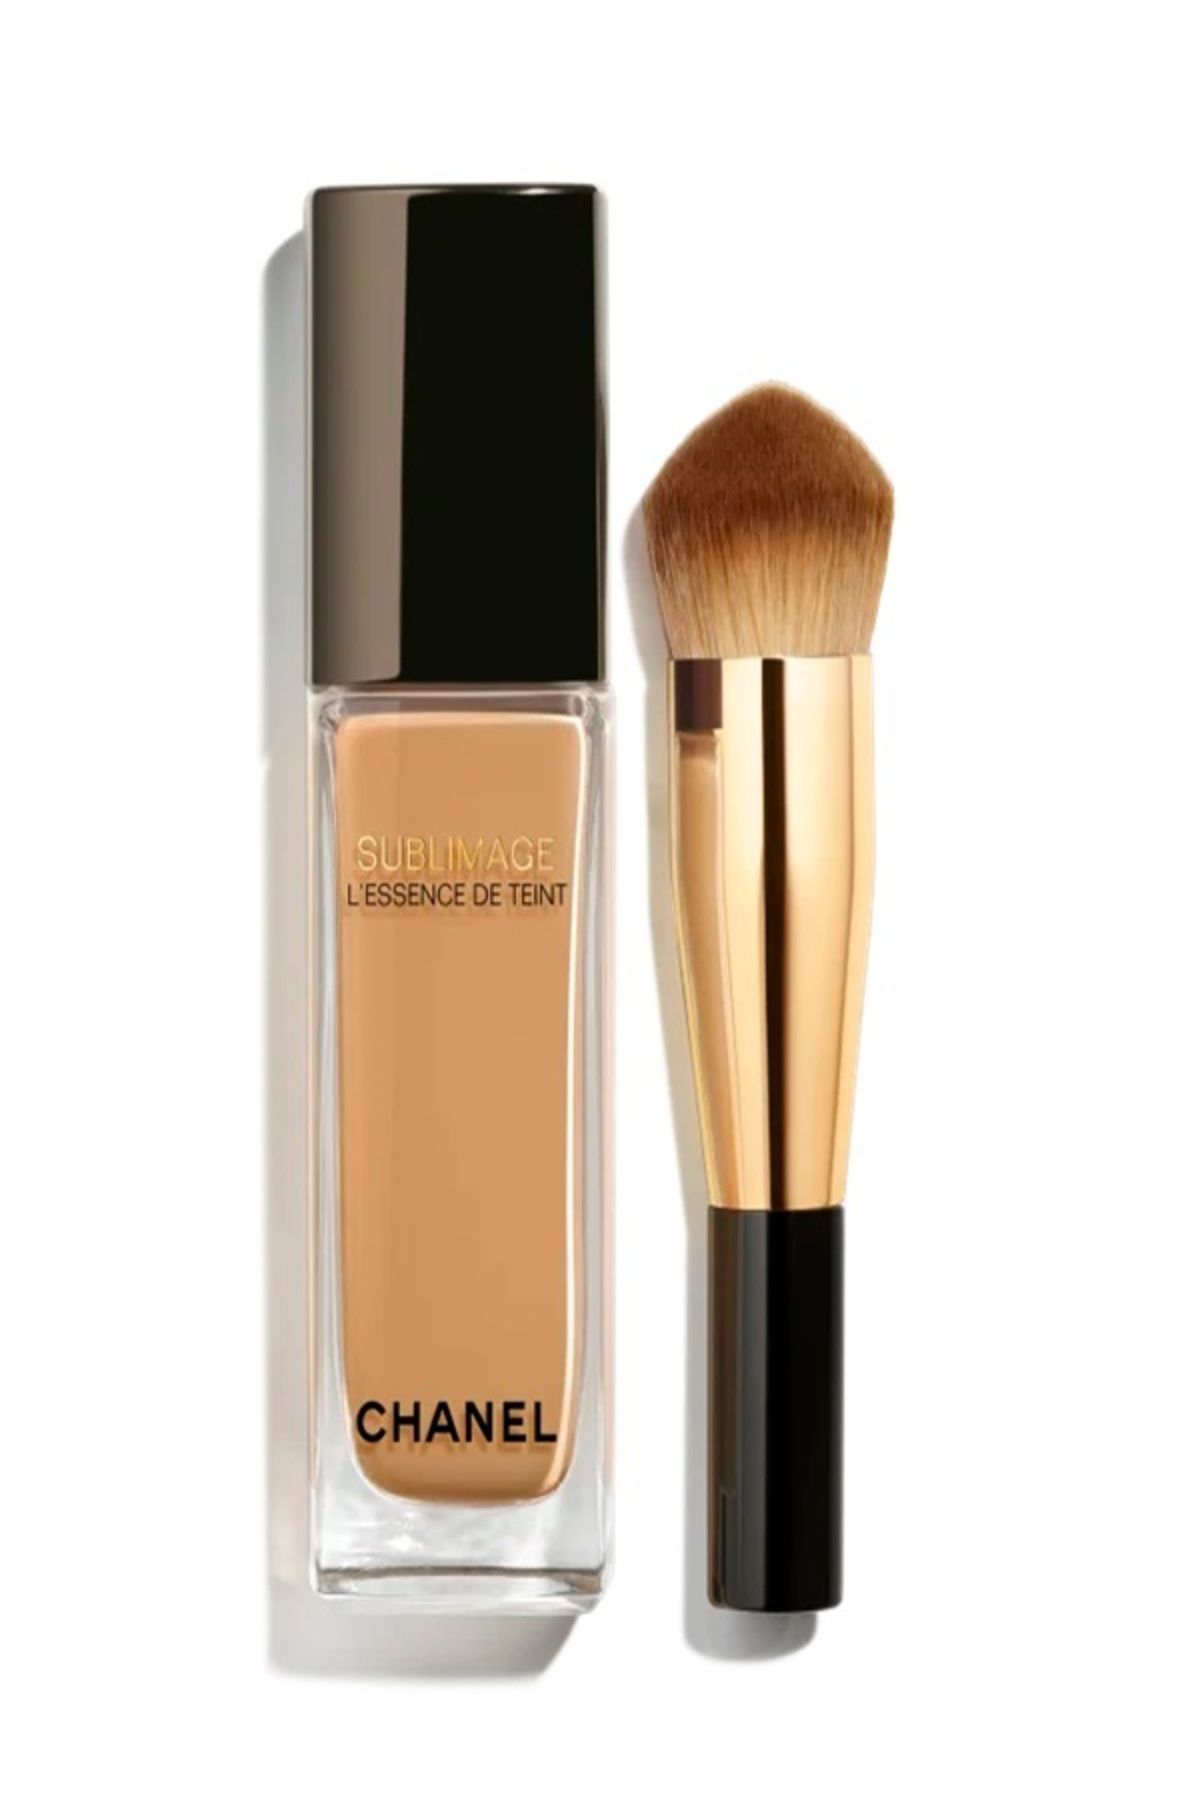 Chanel سرم مرطوب کننده کرم پودر رنگی SUBLIMAGE L'ESSENCE DE TEINT زیبایی و جذابیت بی نظیر برای پوست شما شماره B30